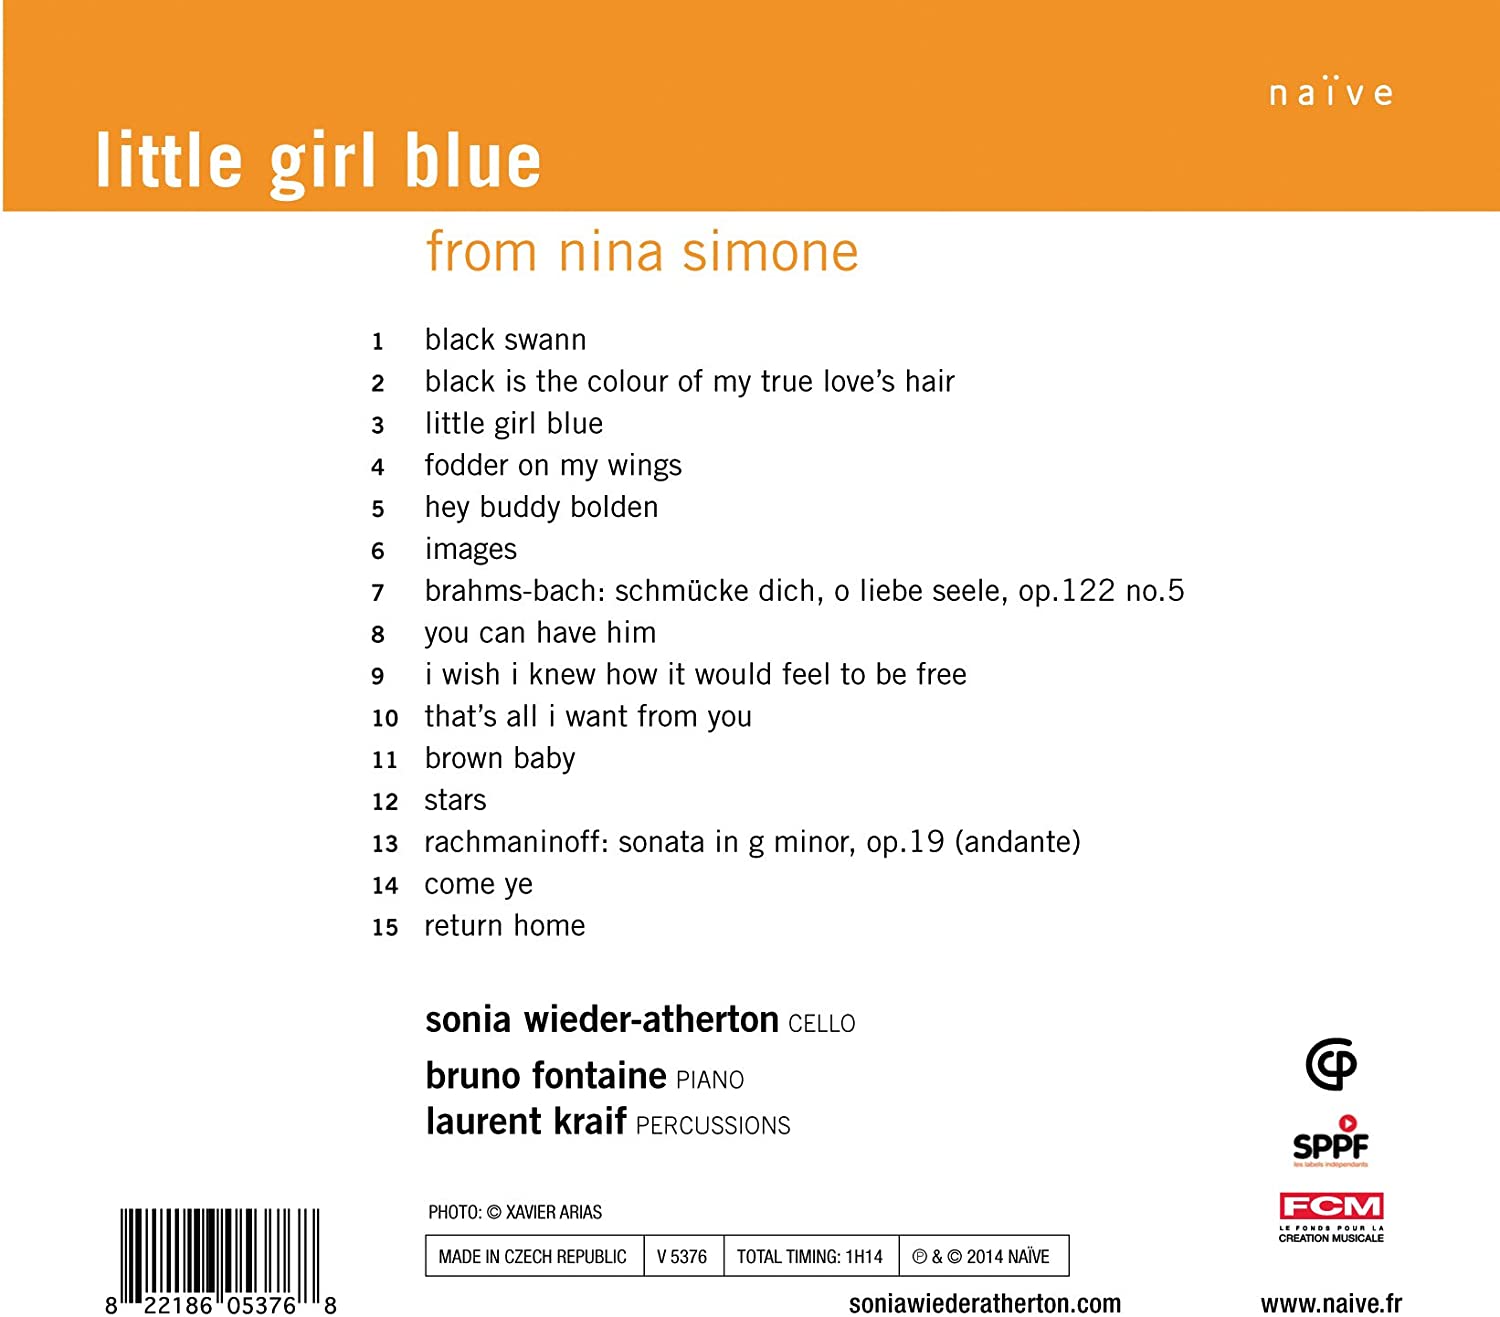 Sonia Wieder-Atherton 리틀 걸 블루 - 니나 시몬을 기리며 (Little Girl Blue - from Nina Simone)